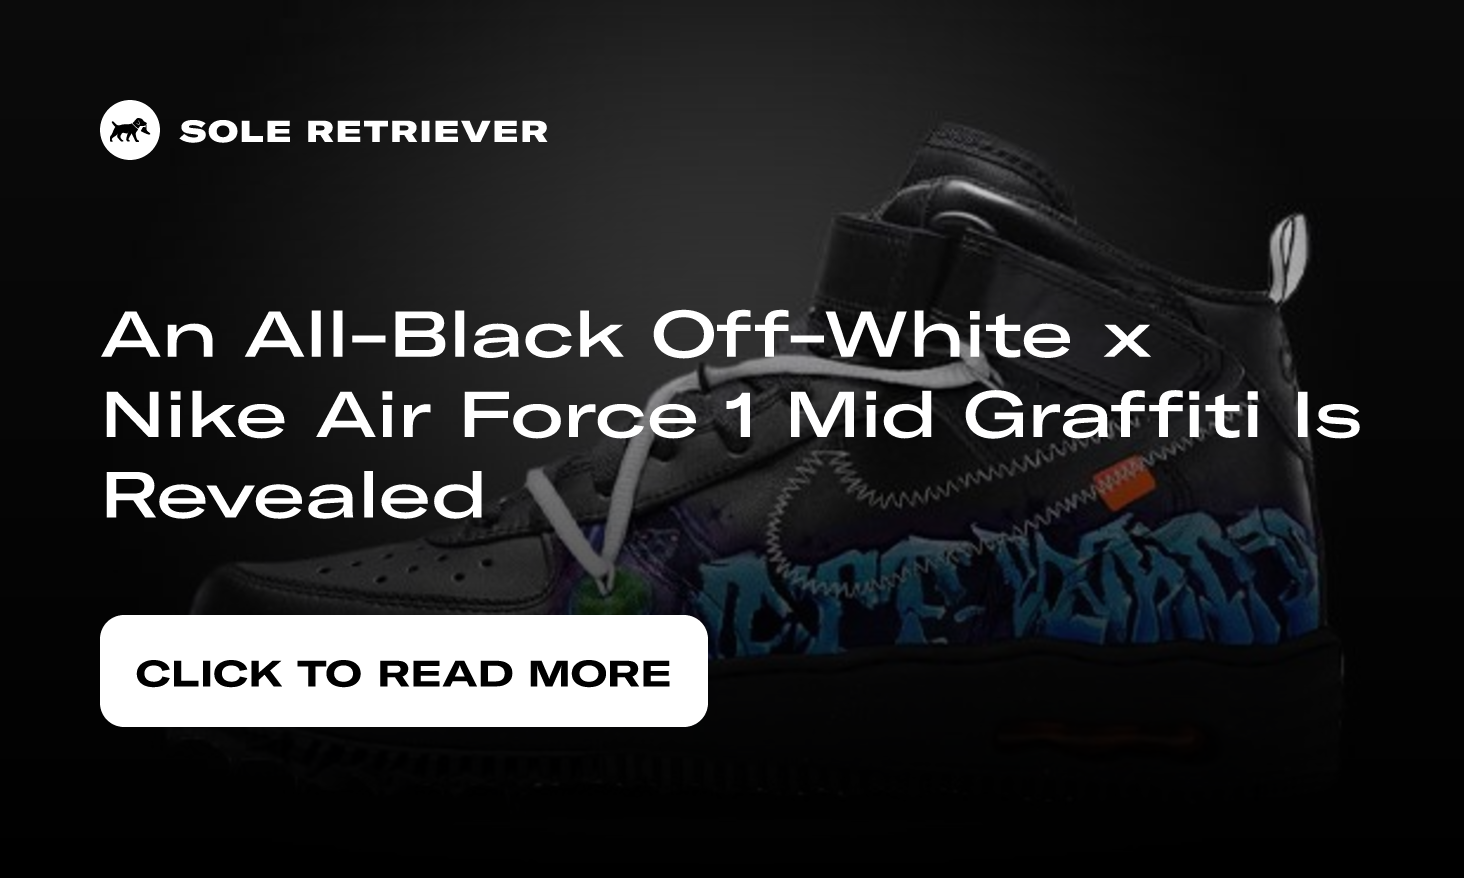 Off-White x Nike Air Force 1 Mid Graffiti “White” and “Black